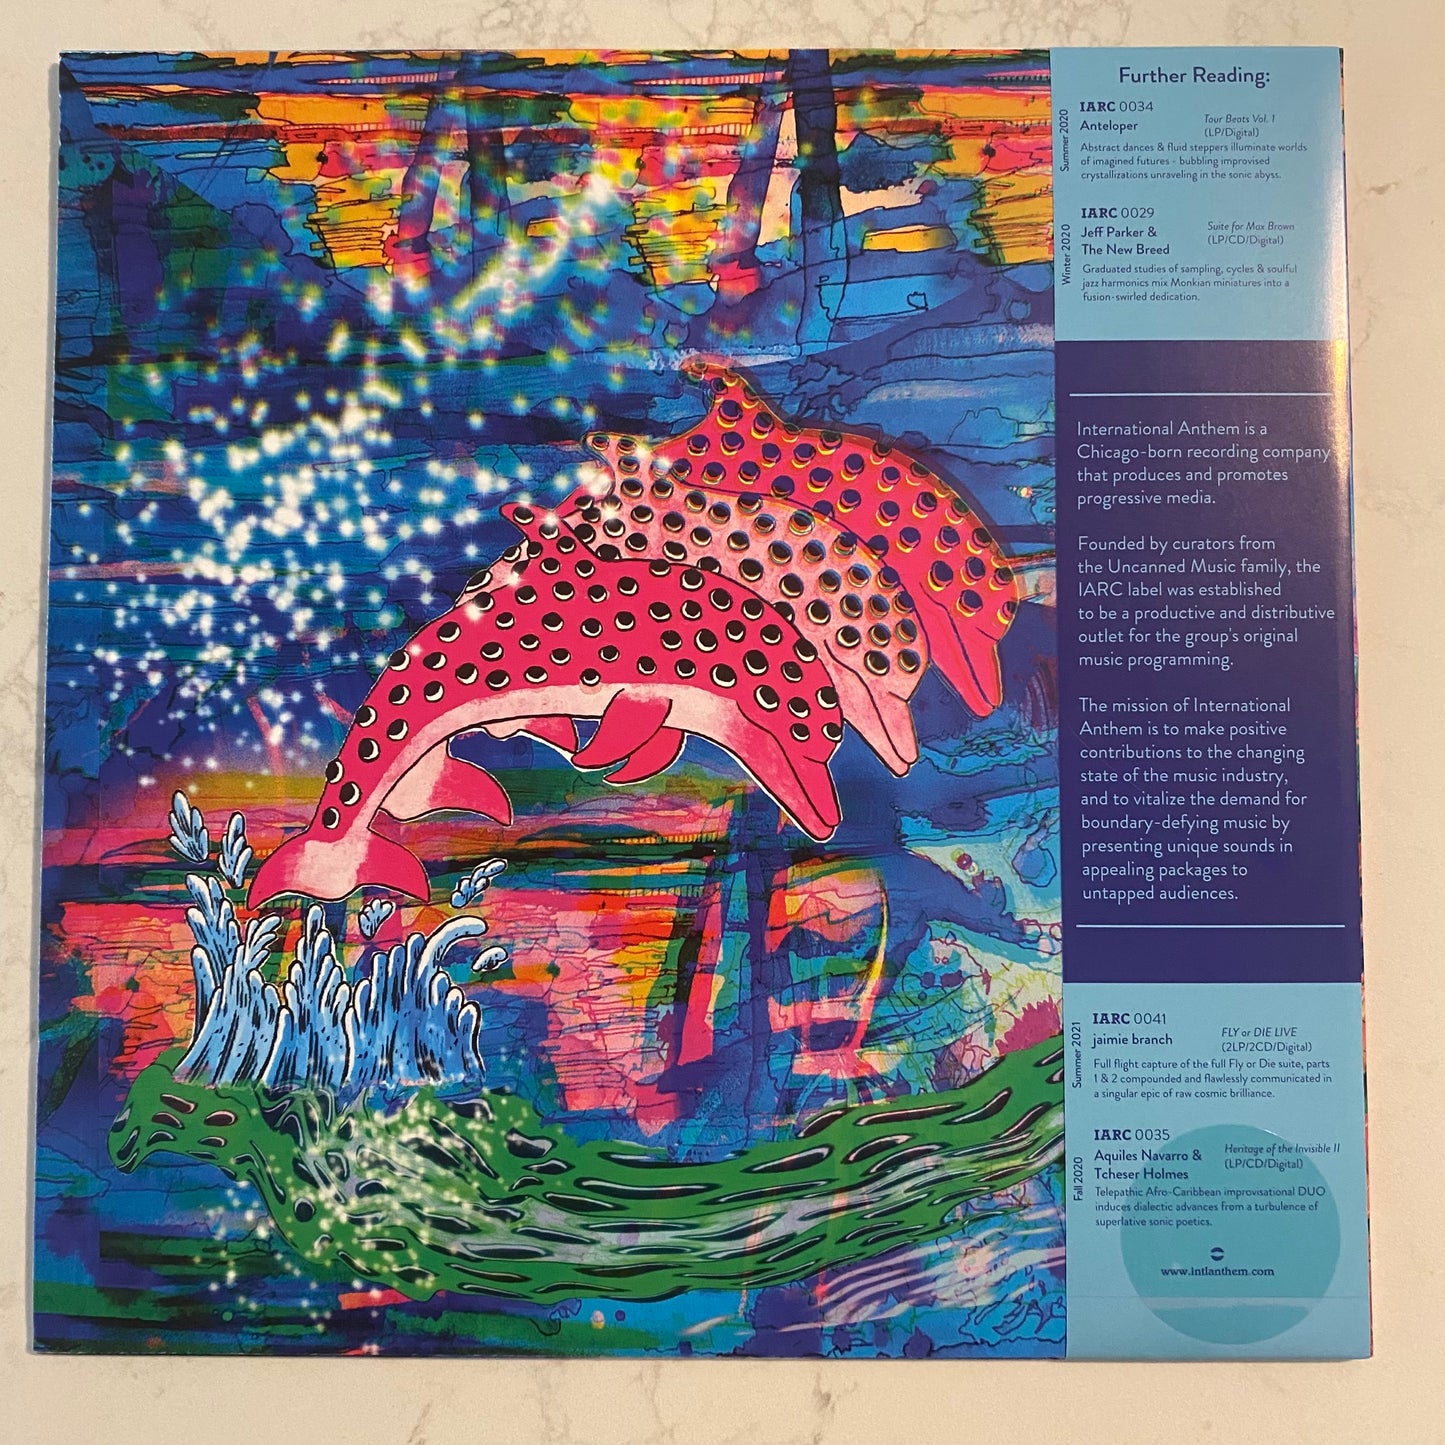 Anteloper - Pink Dolphins (LP, Album, Ltd, 160)